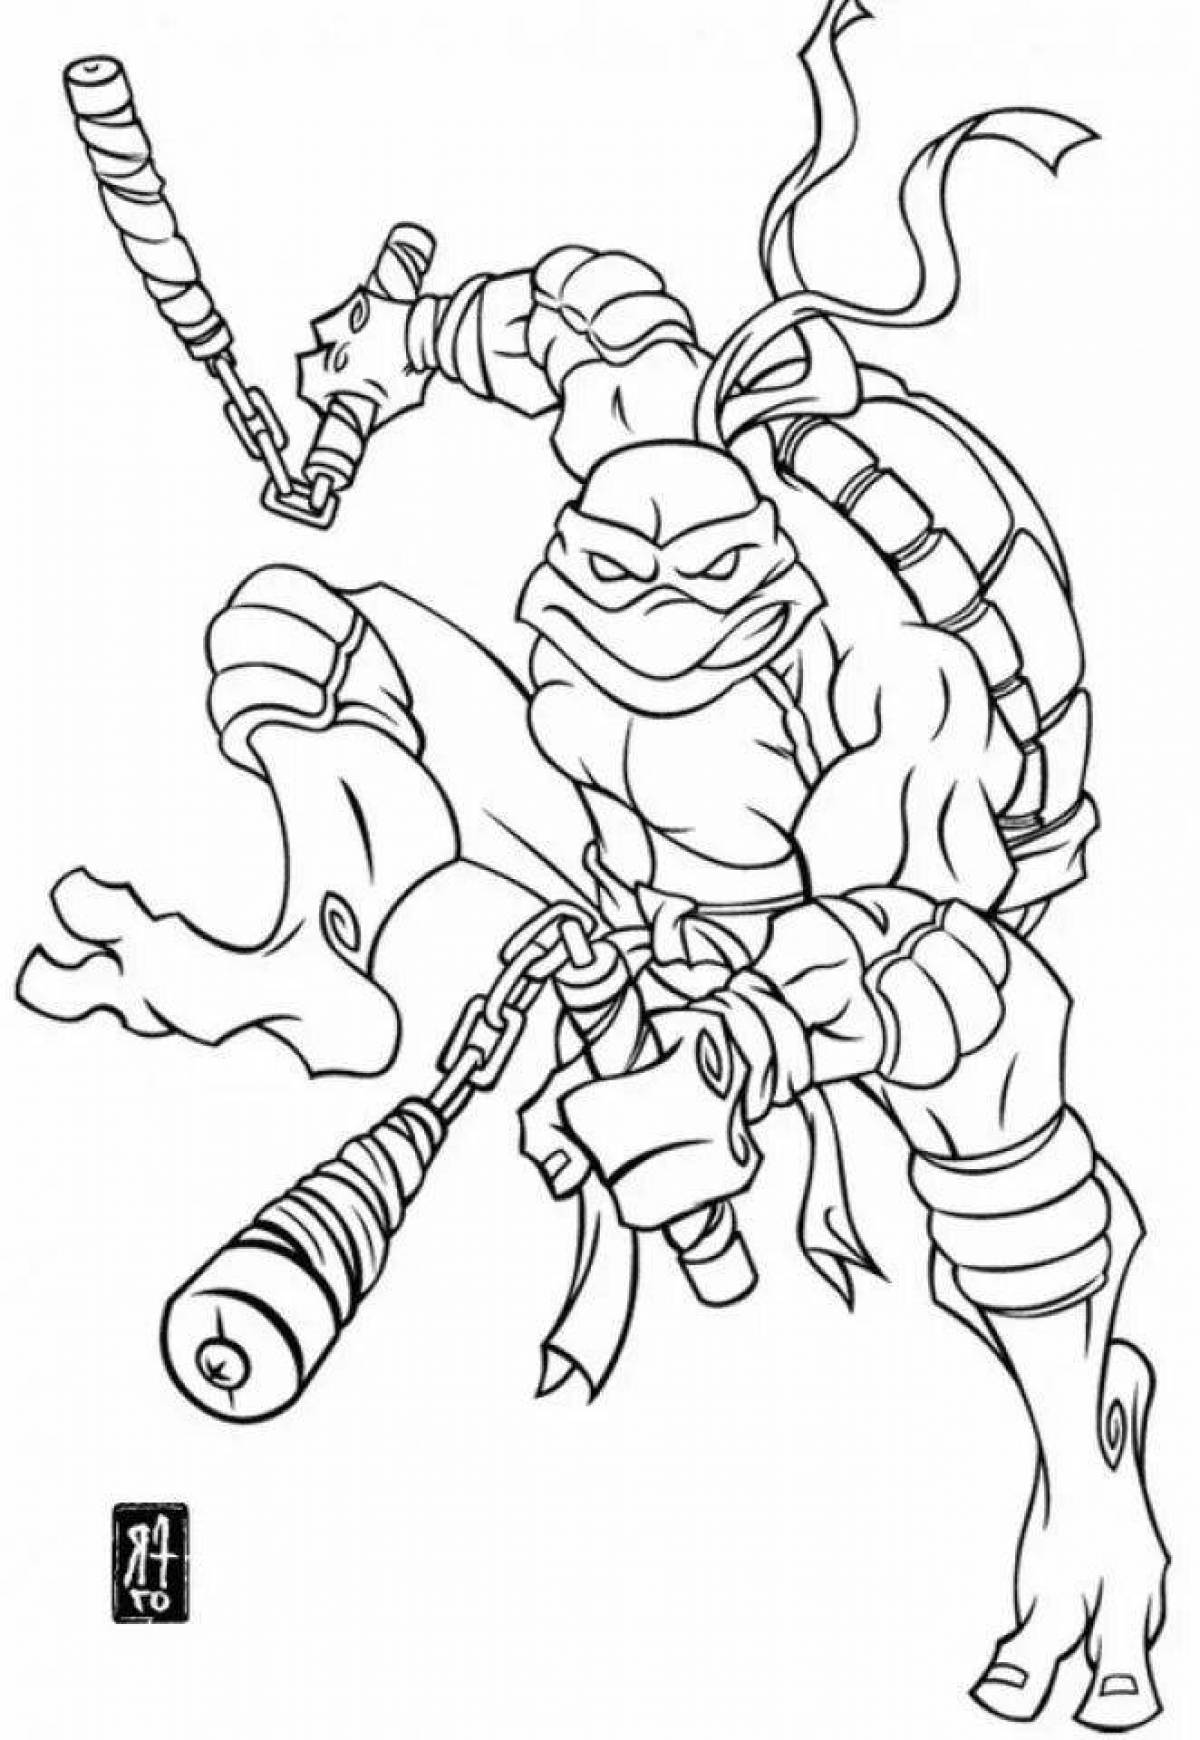 Michelangelo's Animated Teenage Mutant Ninja Turtles coloring book